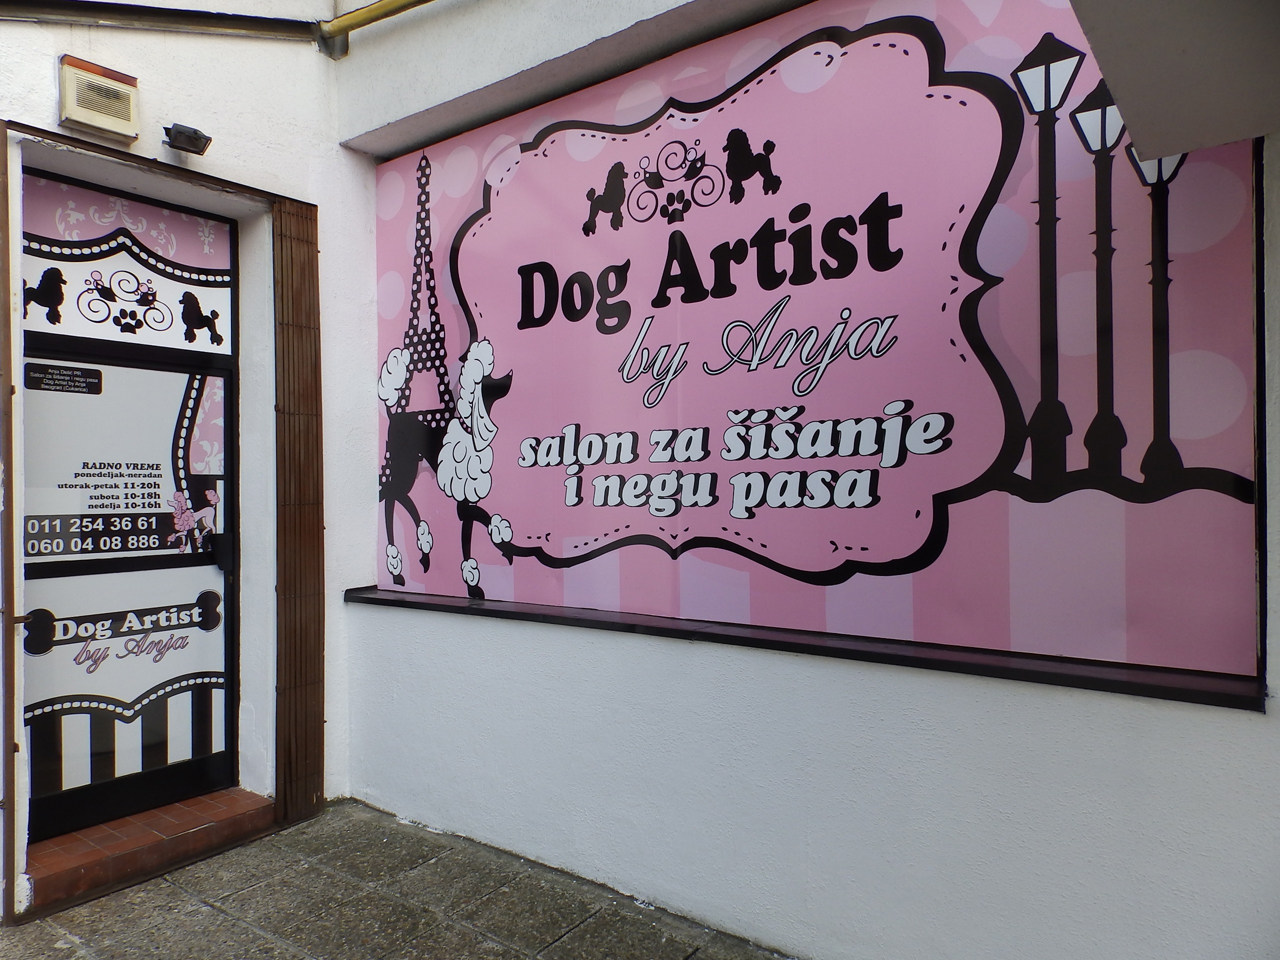 DOG ARTIST BY ANJA - PET GROOMING Pet salon, dog grooming Beograd